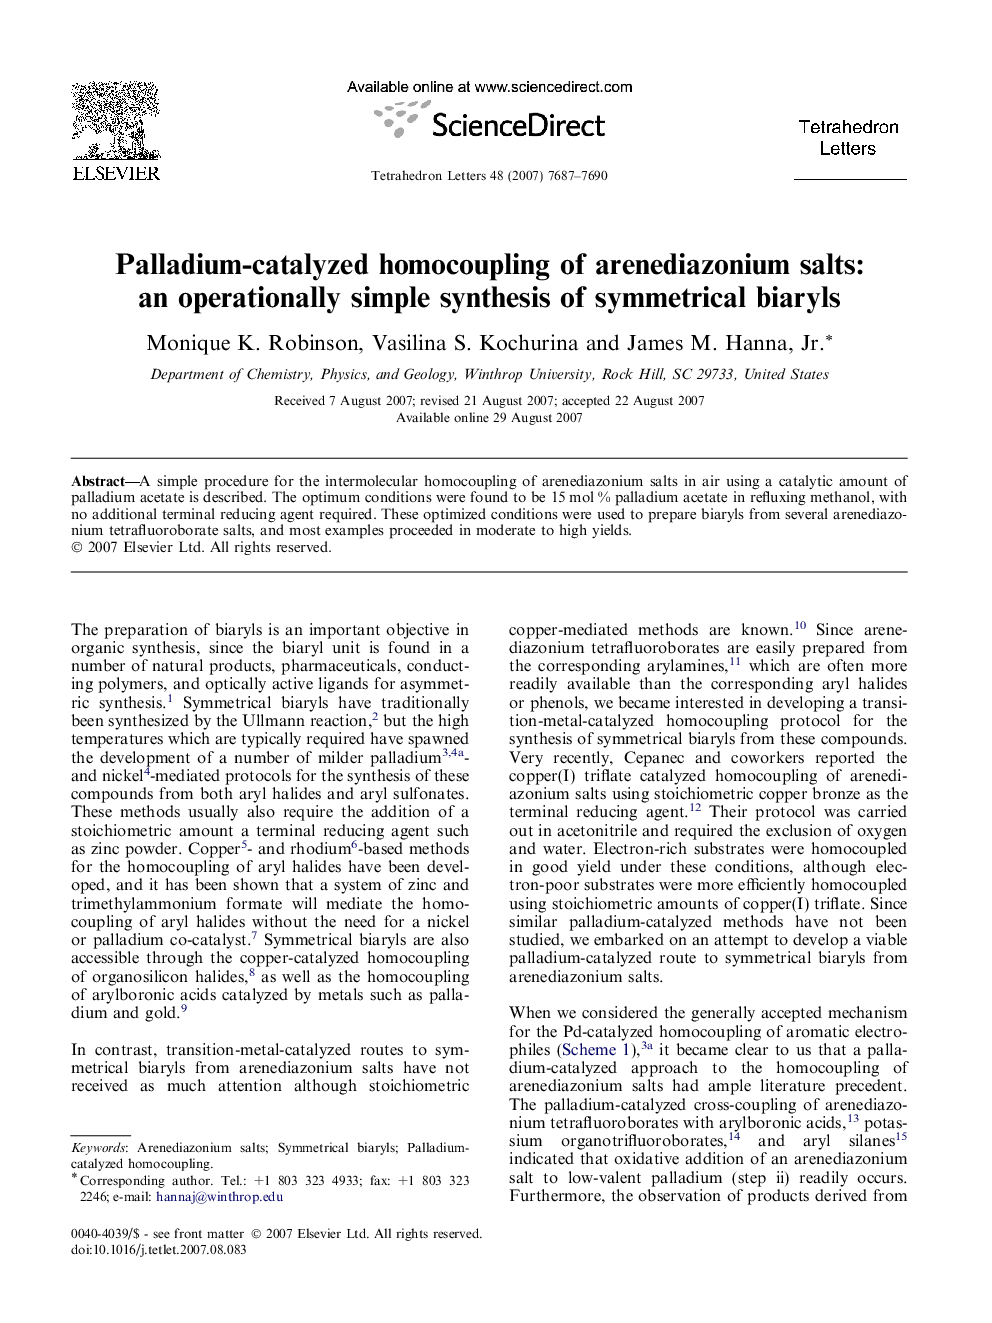 Palladium-catalyzed homocoupling of arenediazonium salts: an operationally simple synthesis of symmetrical biaryls